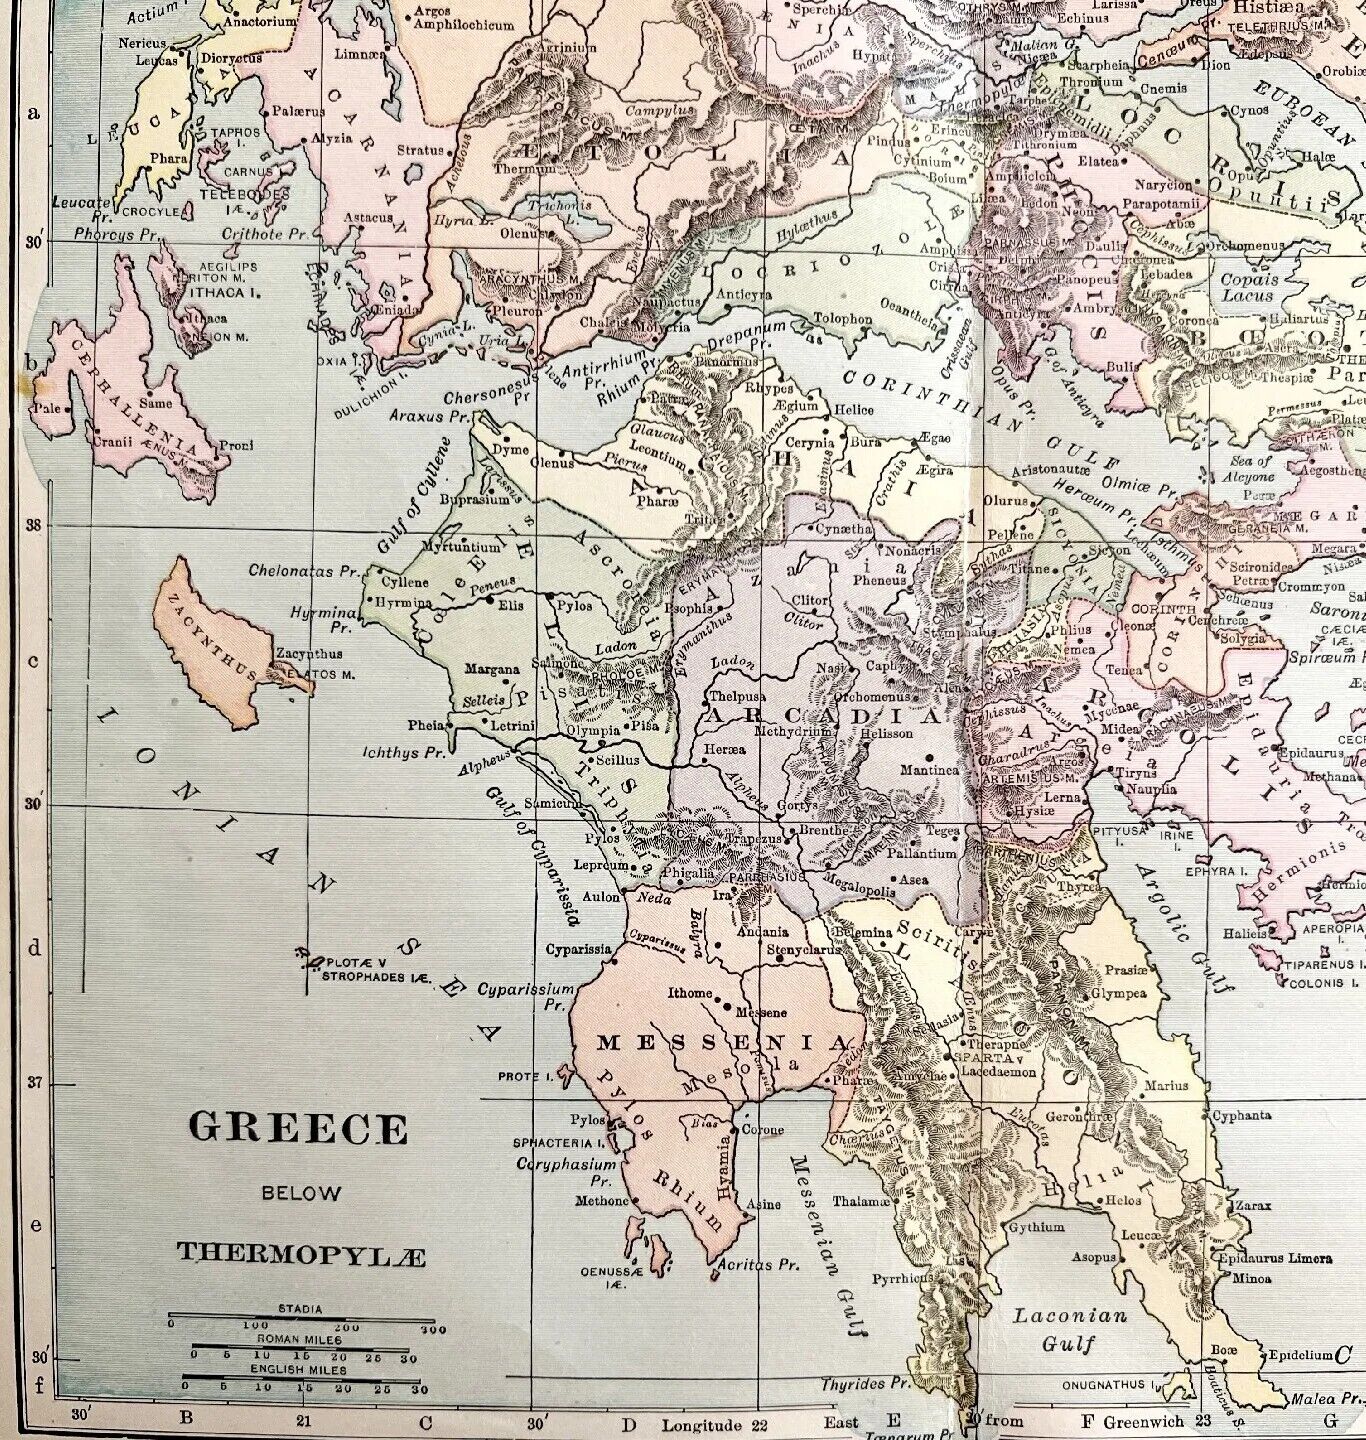 Greece Below Thermopyle Map Print 1893 Victorian Mythology Antique DWS5A